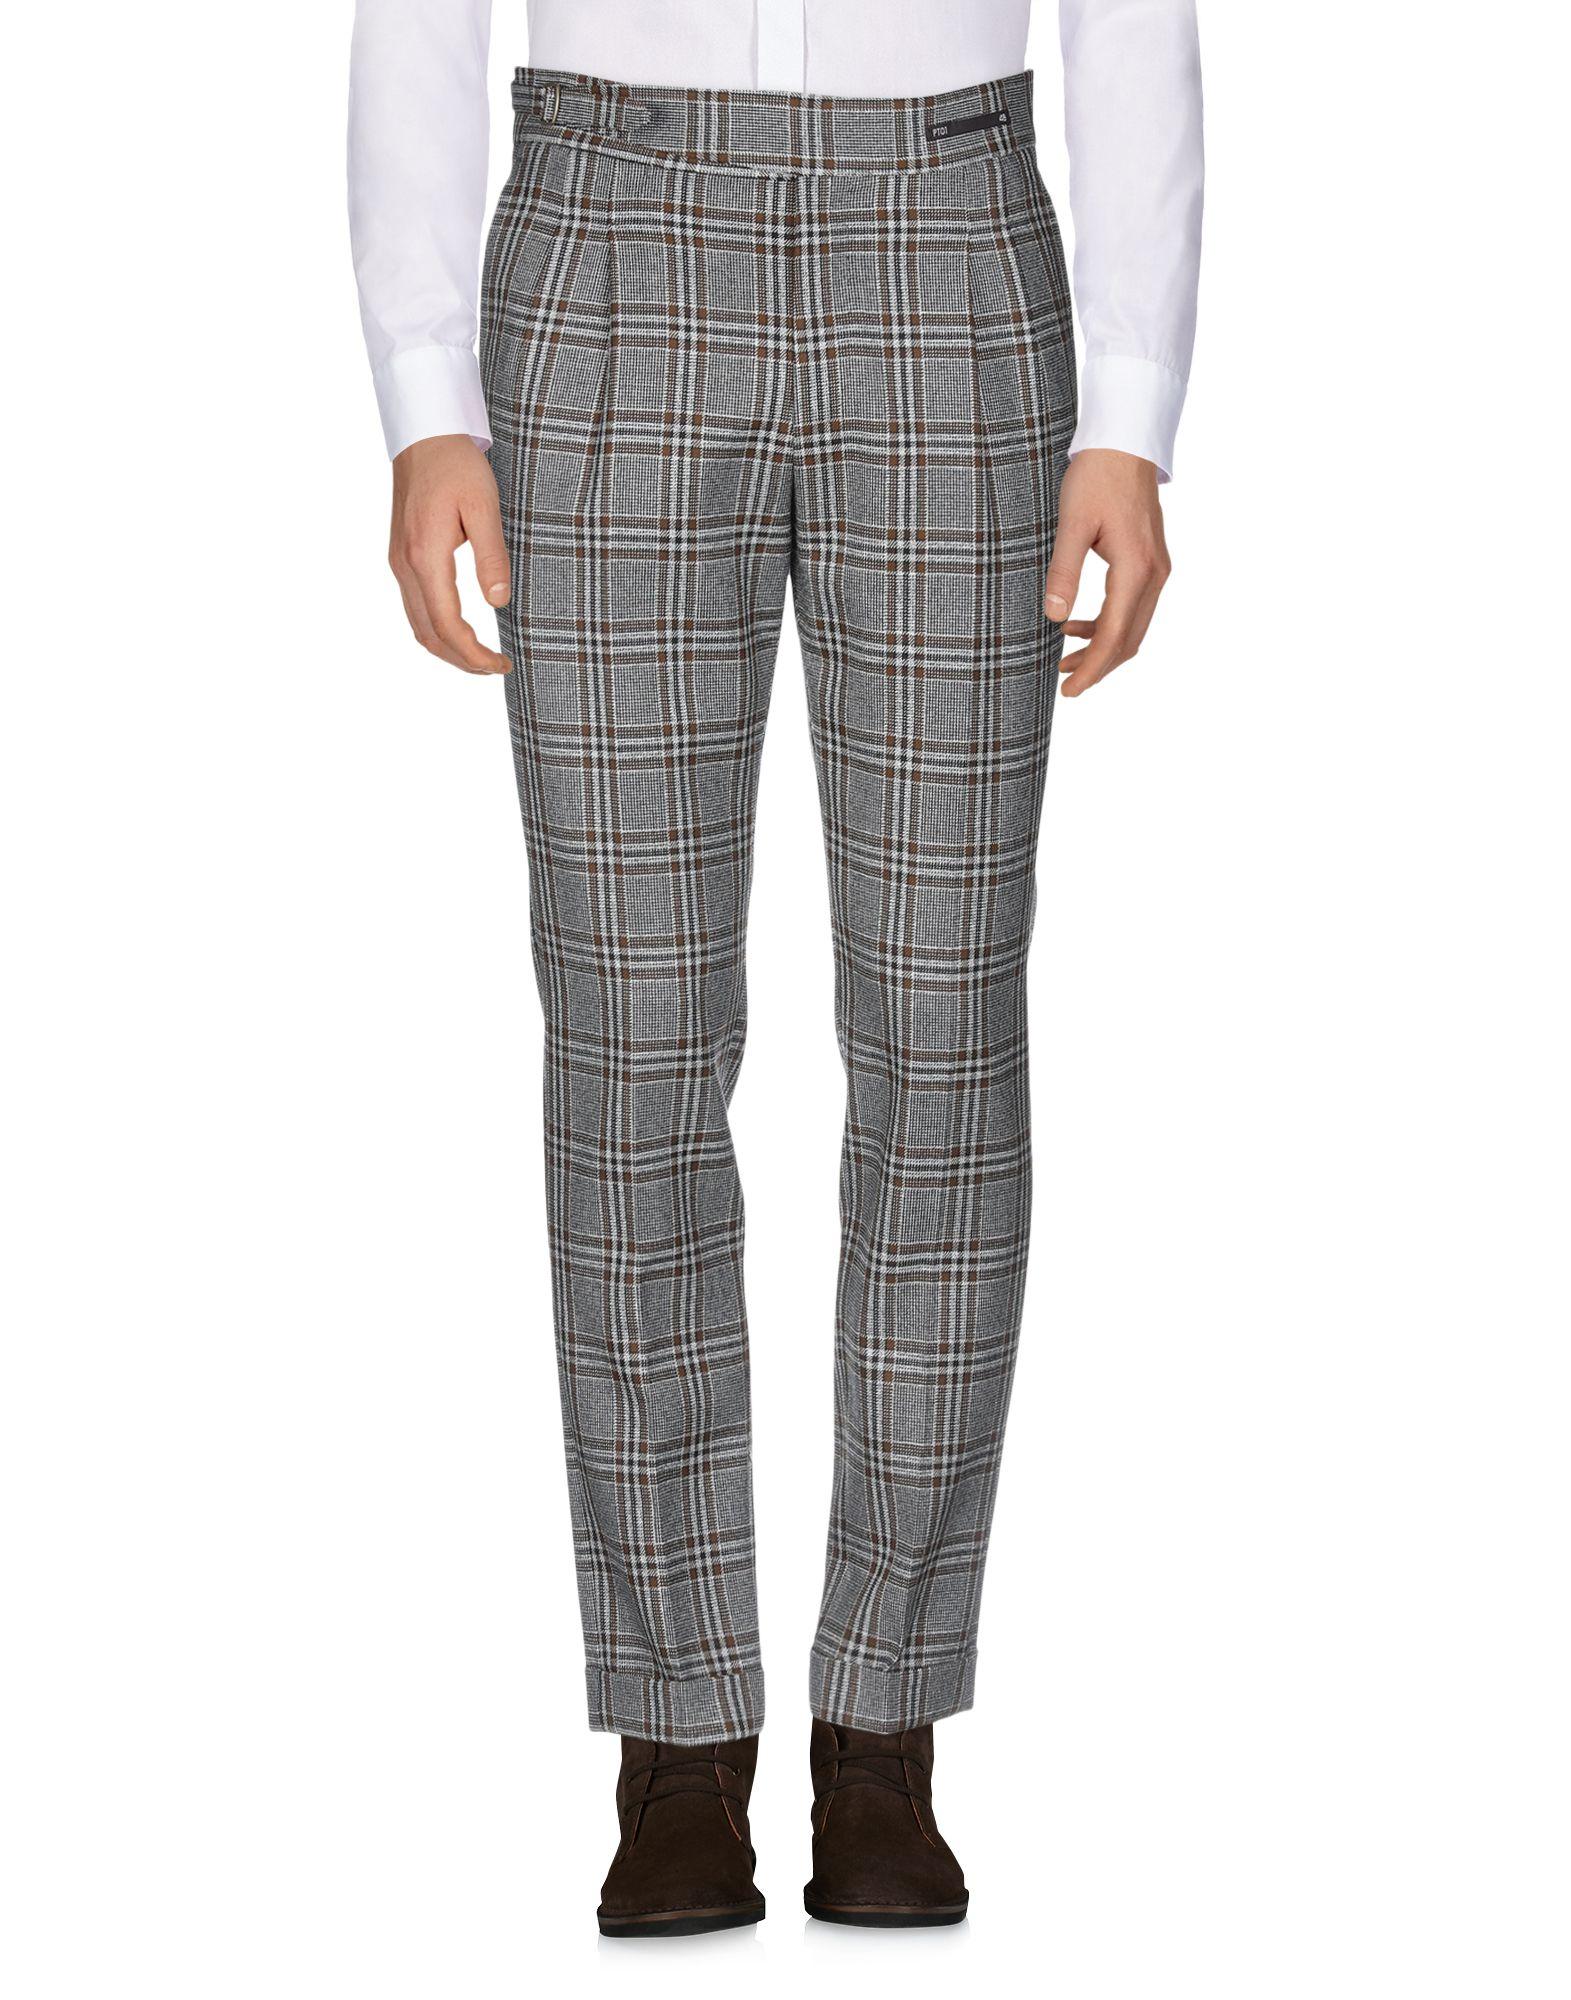 PT Torino Flannel Casual Pants in Khaki (Gray) for Men - Lyst